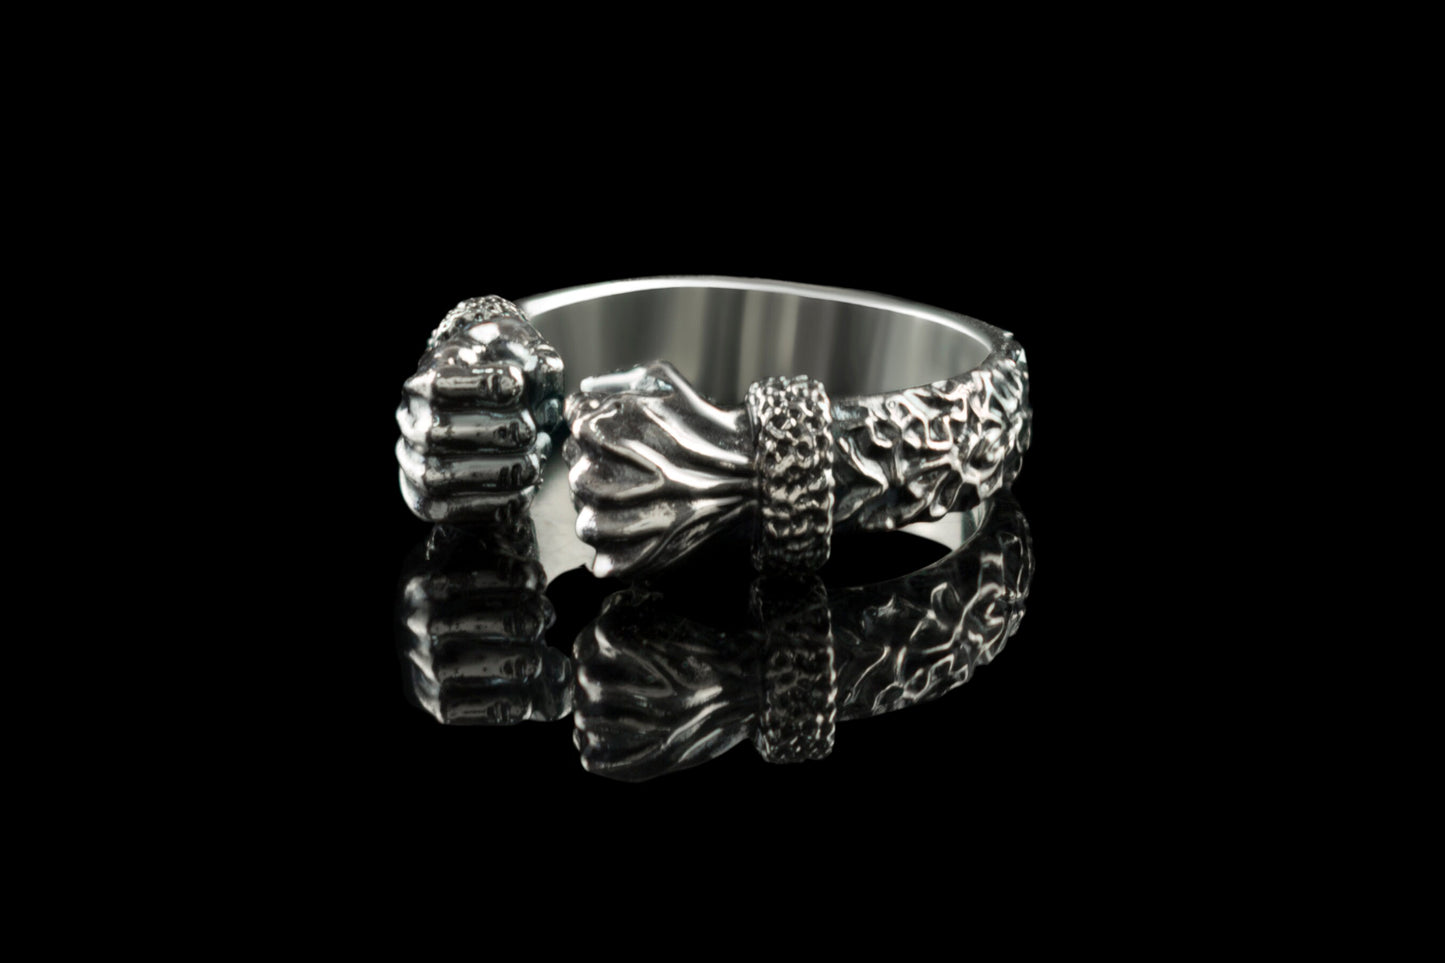 Adjustable ring for men Silver ring Biker jewelry Silver biker jewelry